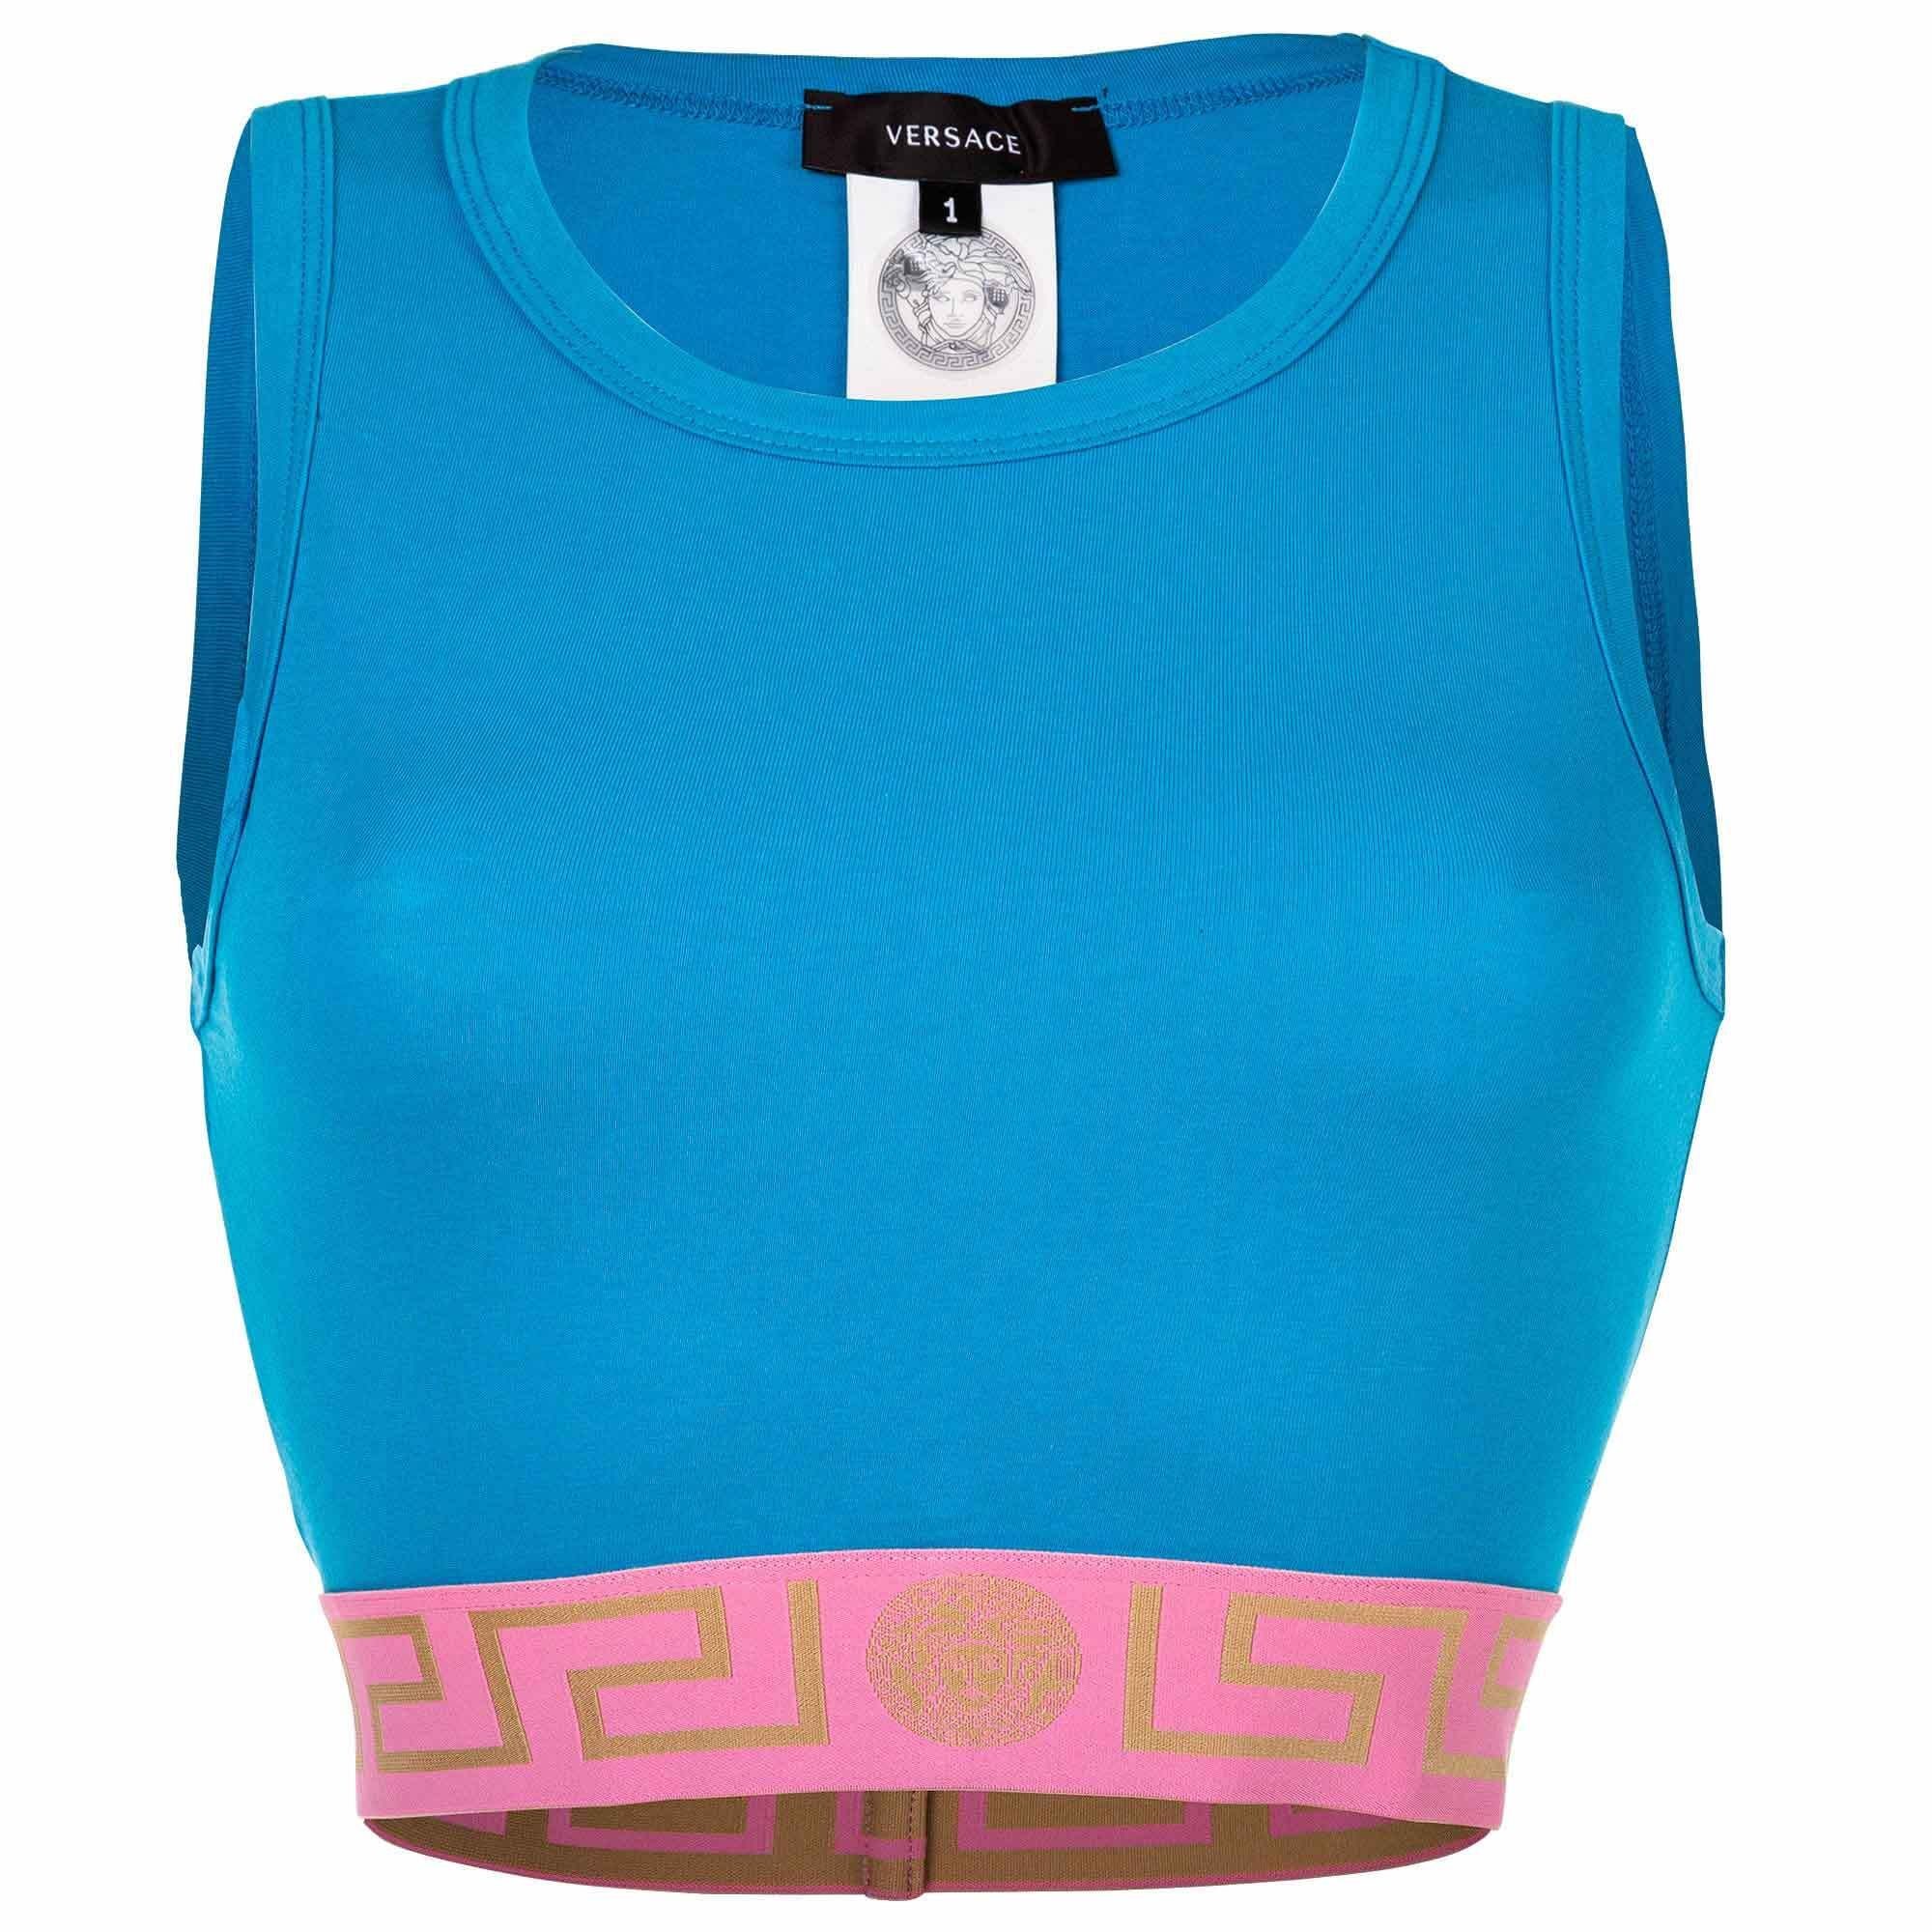 Versace Bustier Damen Bustier - TOPEKA, Underwear T-Shirt, Tank